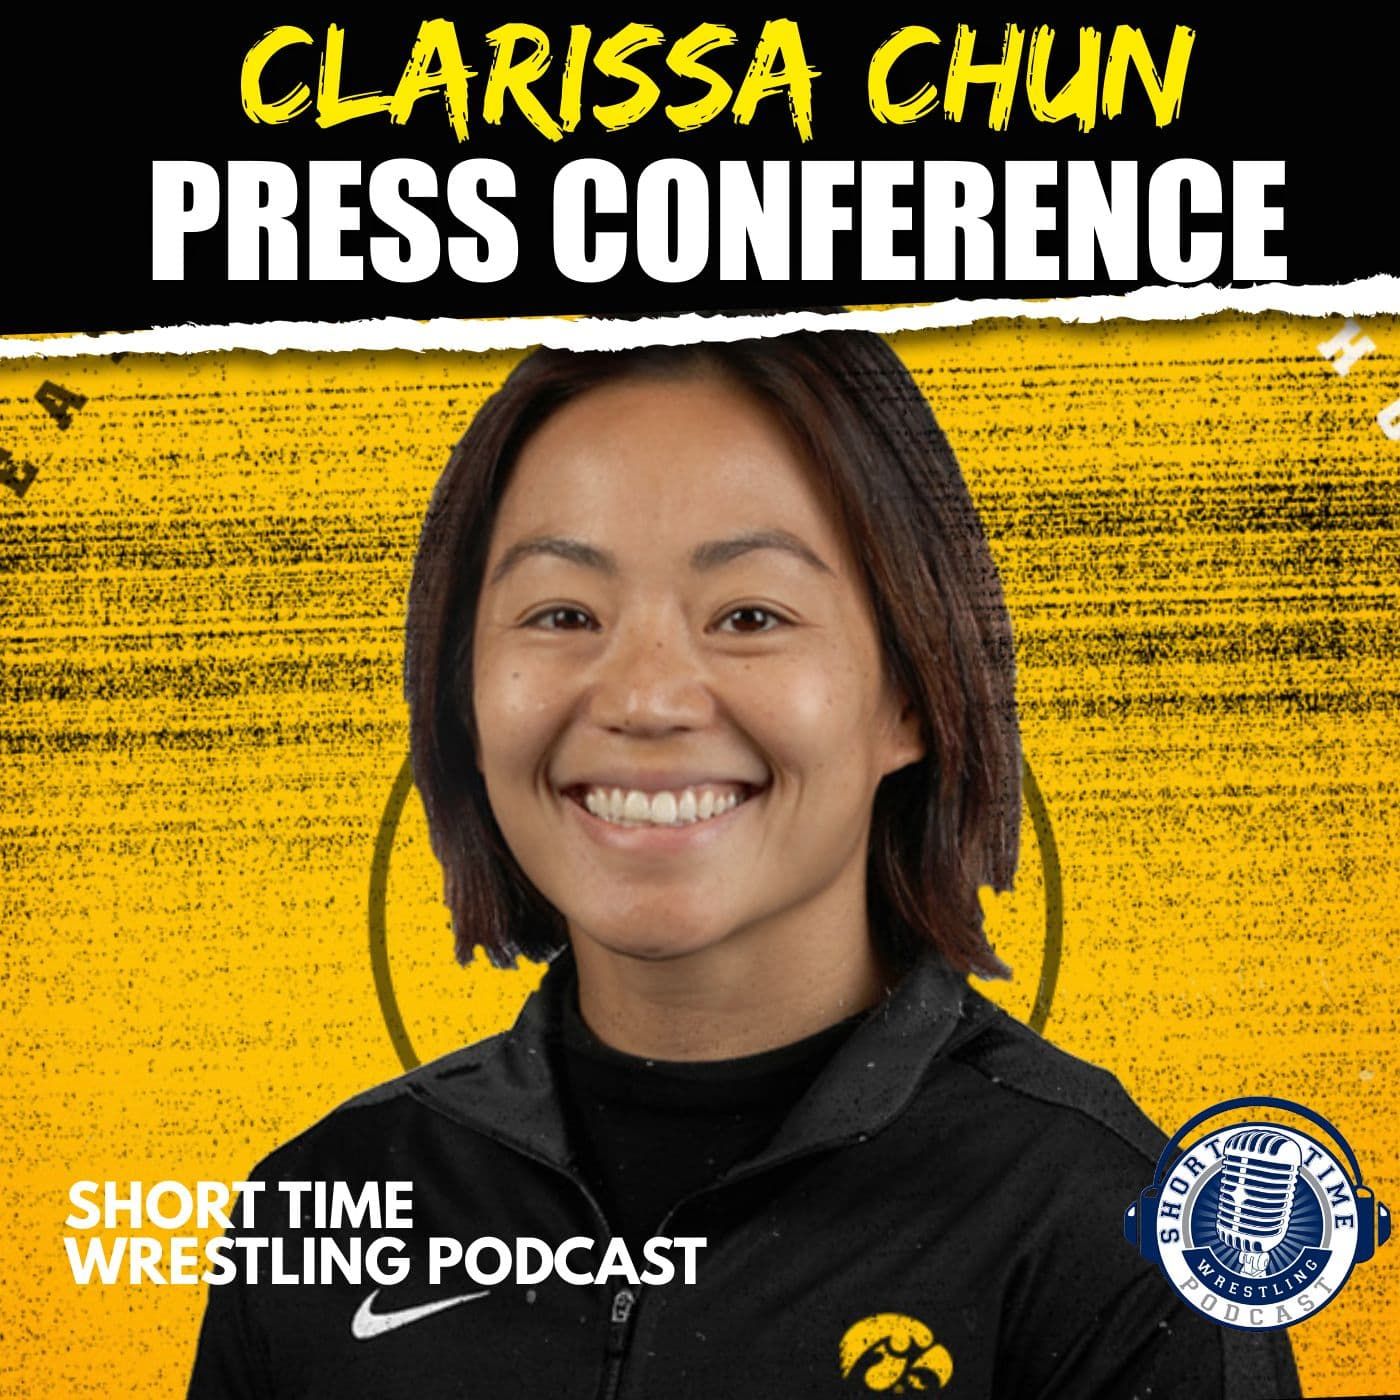 Iowa introduces new women's wrestling coach Clarissa Chun (Press Conference)